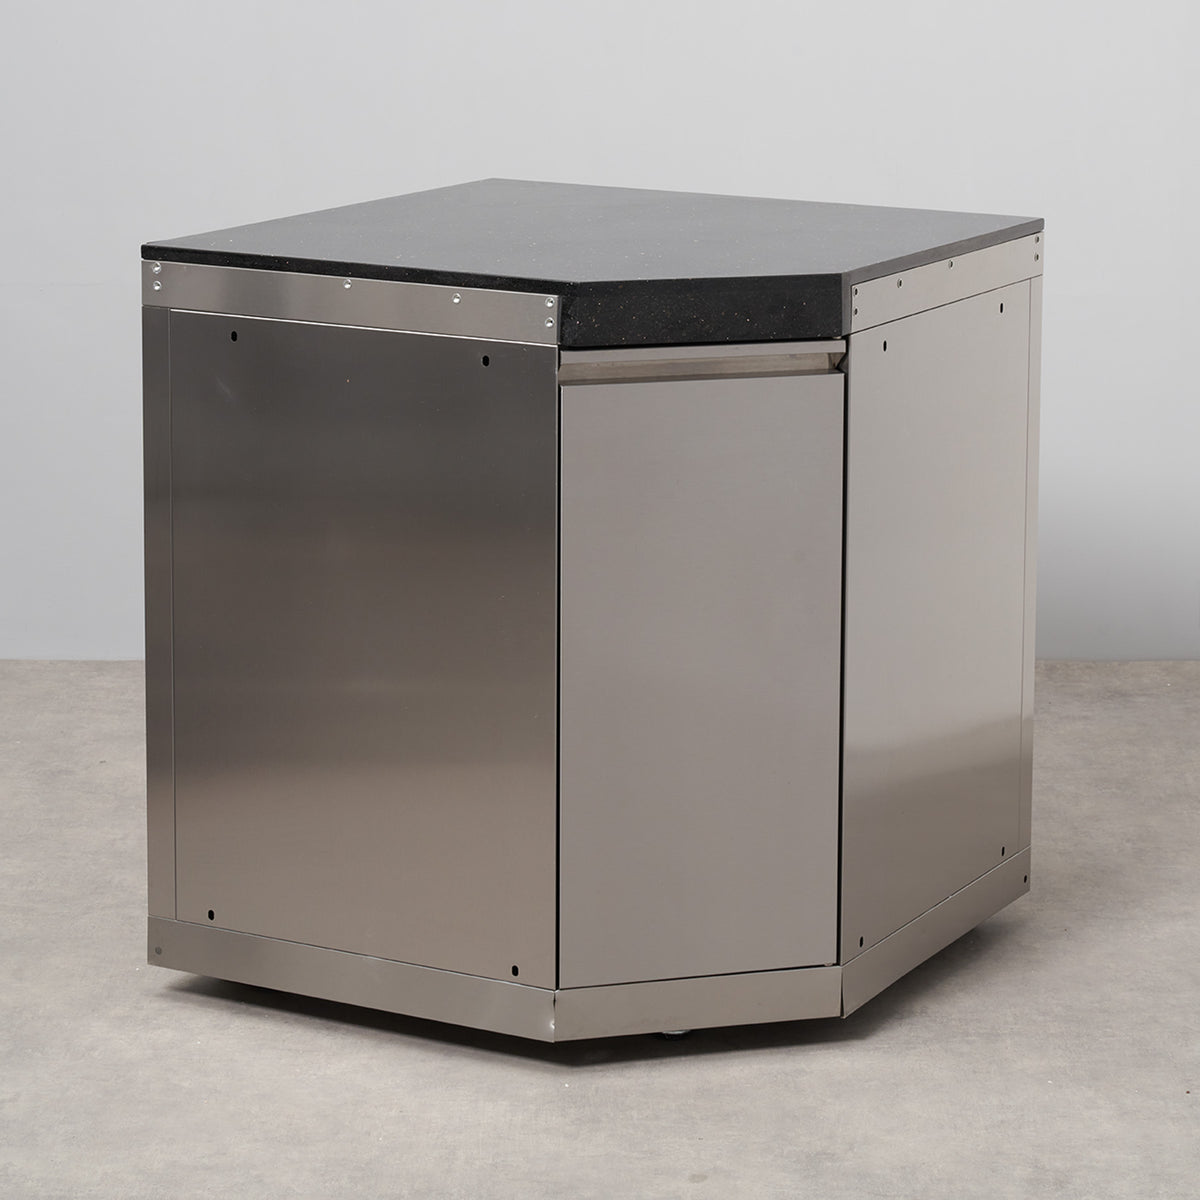 Draco Grills Outdoor Kitchen Stainless Steel Corner Cabinet